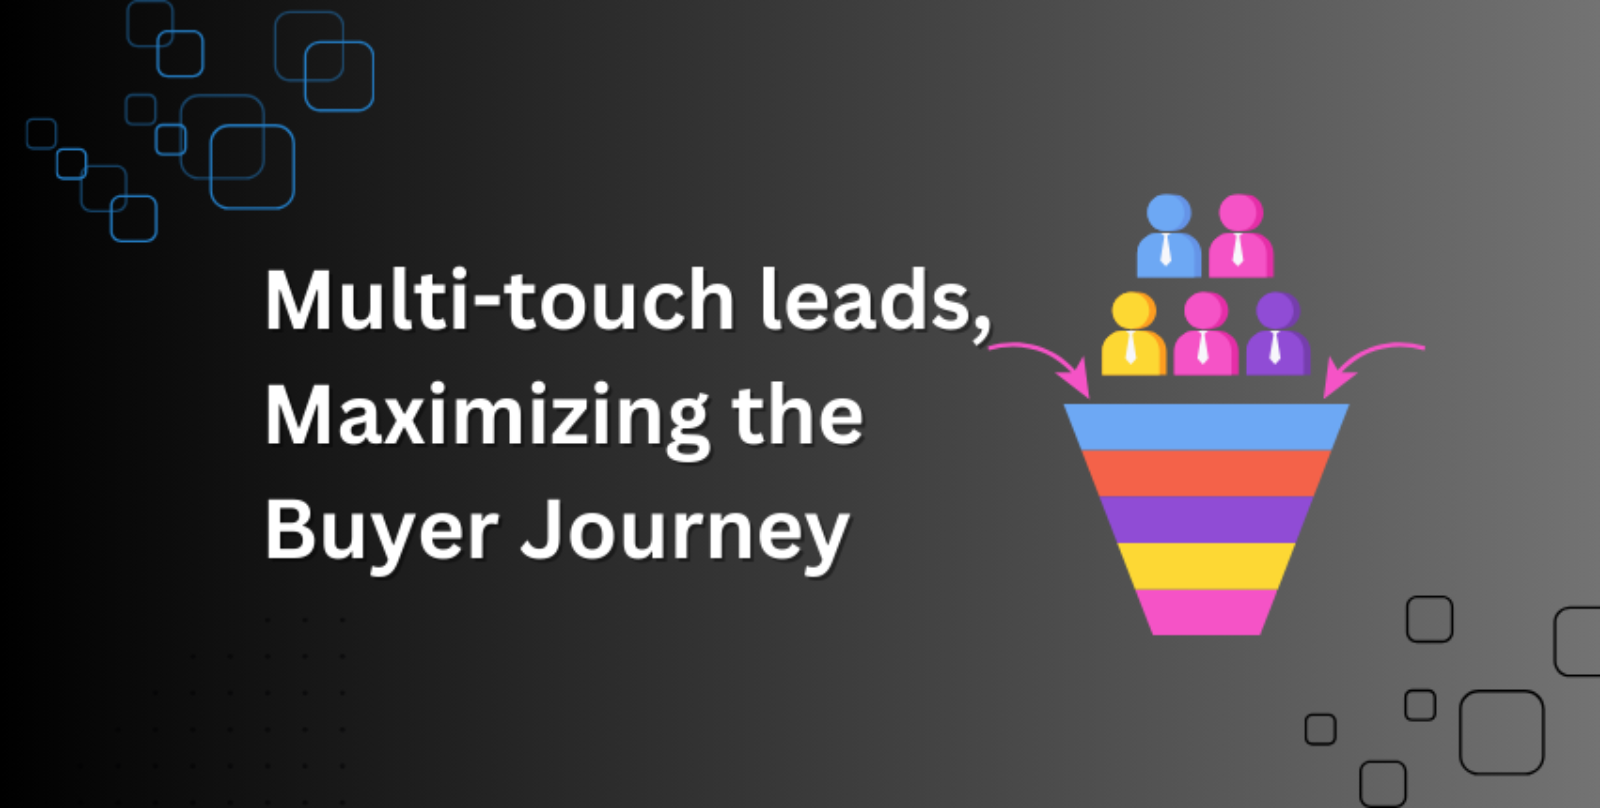 Multi-touch leads enhance buyer journey efficiency.